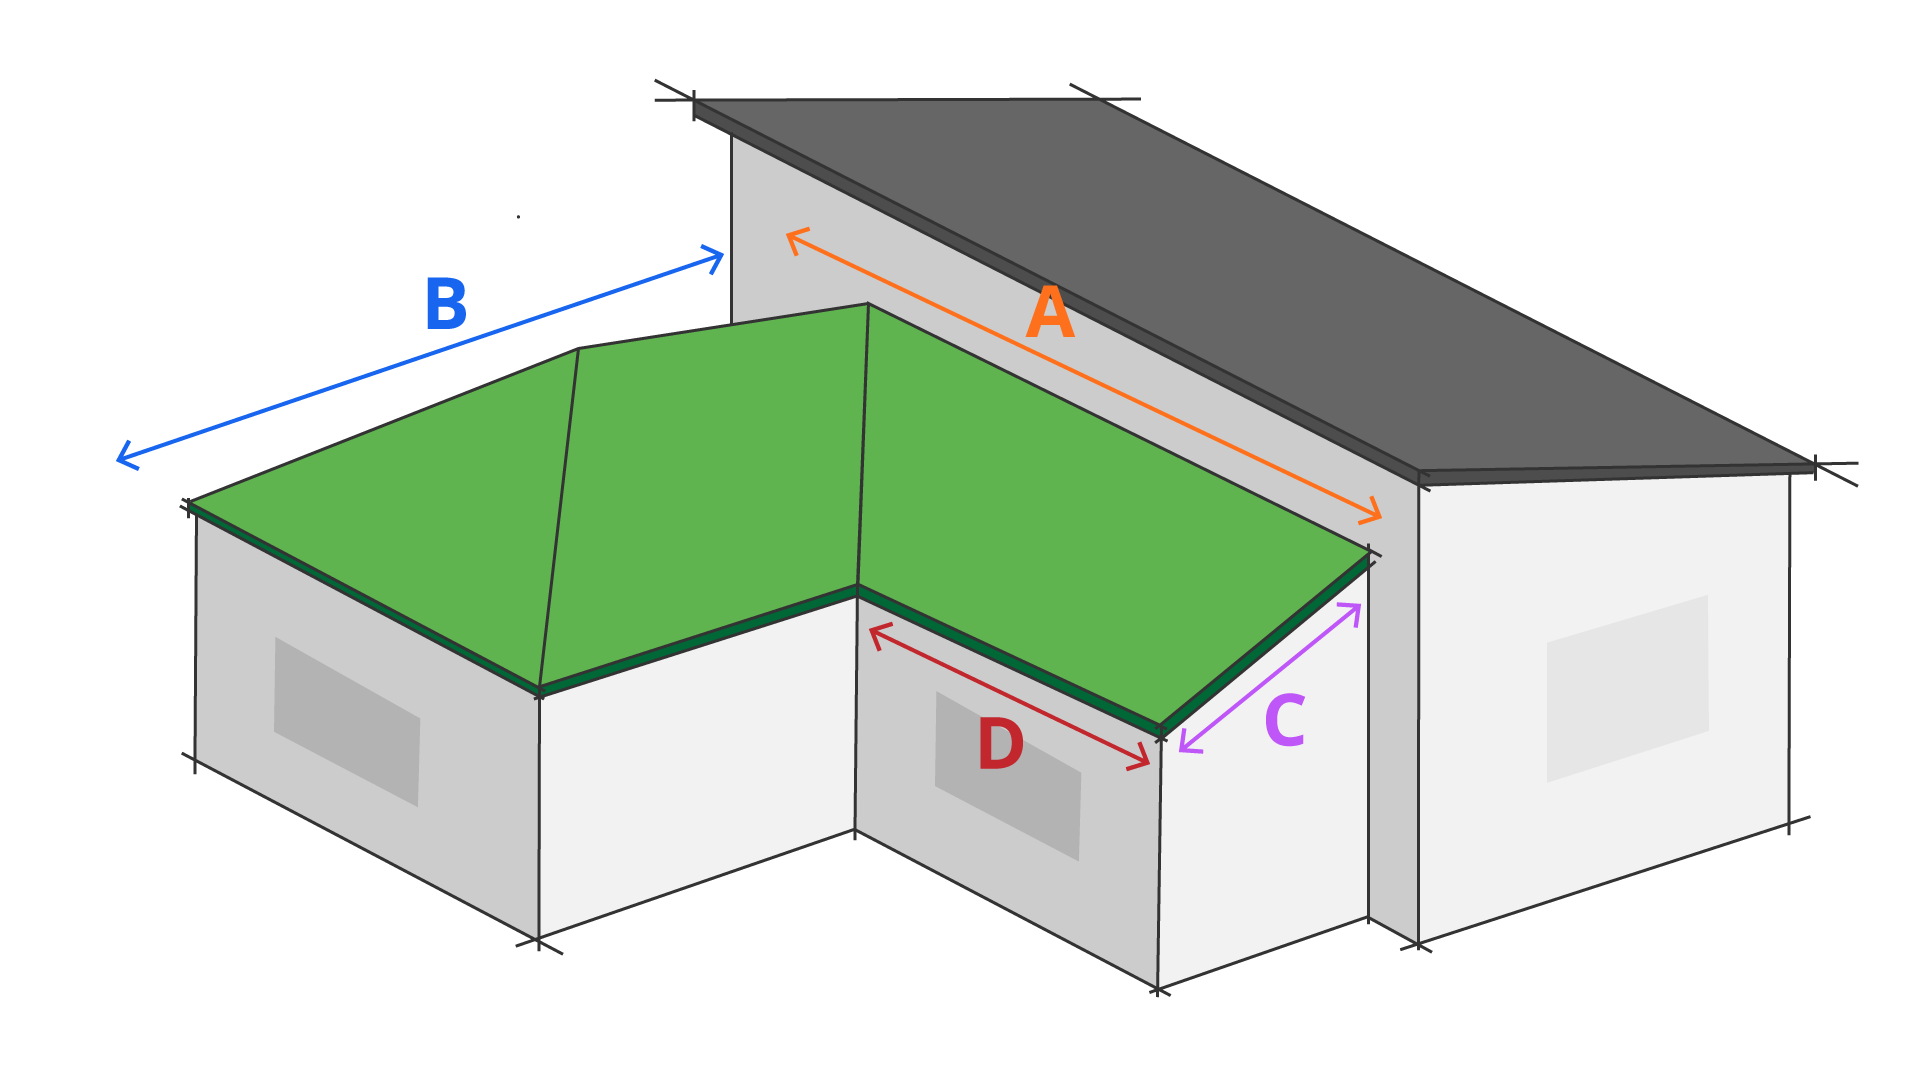 Edwardian P Shape Roof Diagram with coordinates